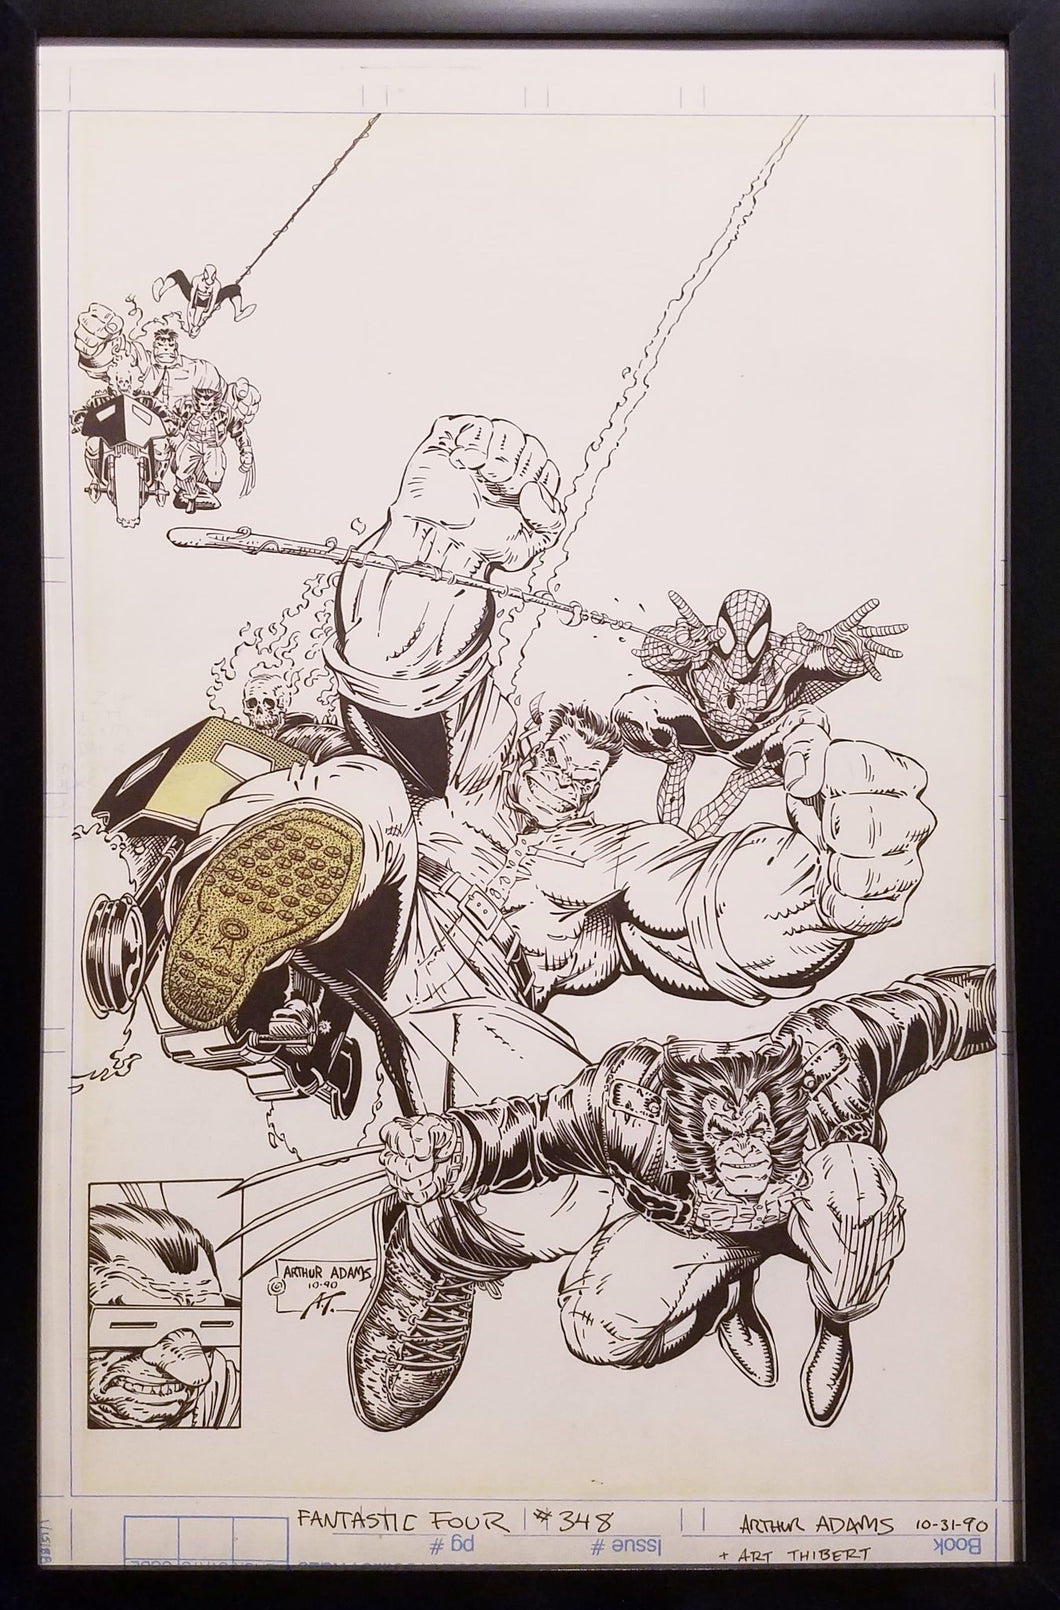 Fantastic Four #348 Hulk Wolverine Art Adams 11x17 FRAMED Original Art Poster Marvel Comics